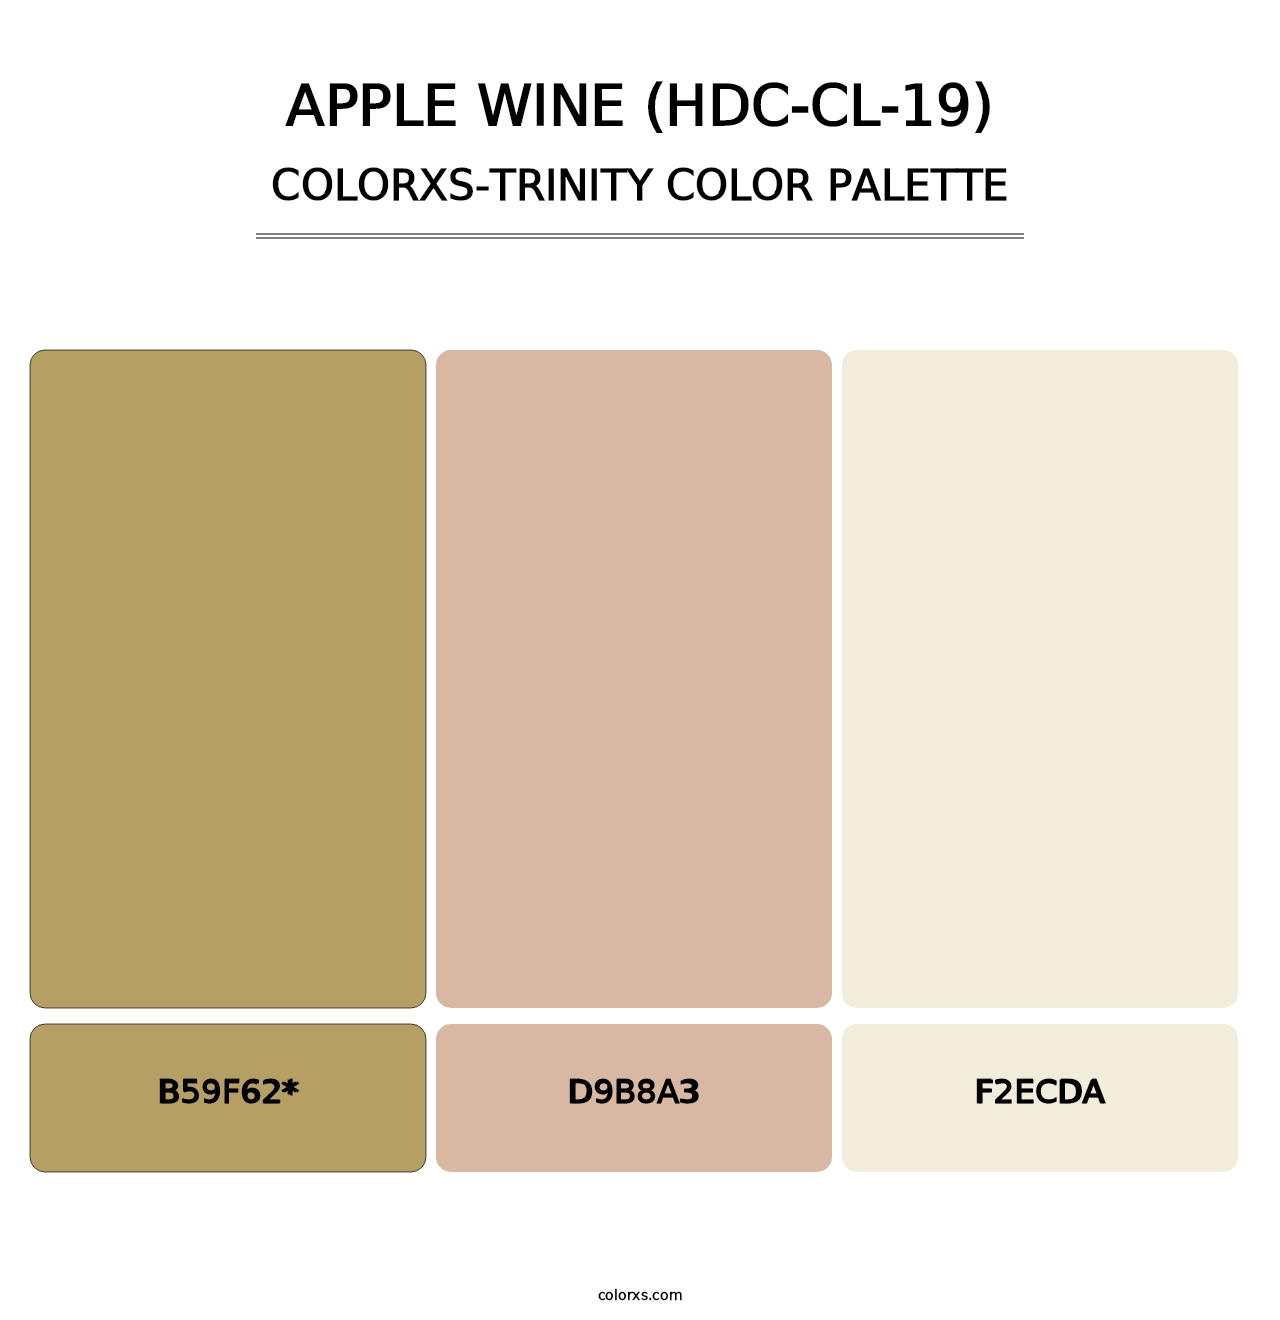 Apple Wine (HDC-CL-19) - Colorxs Trinity Palette